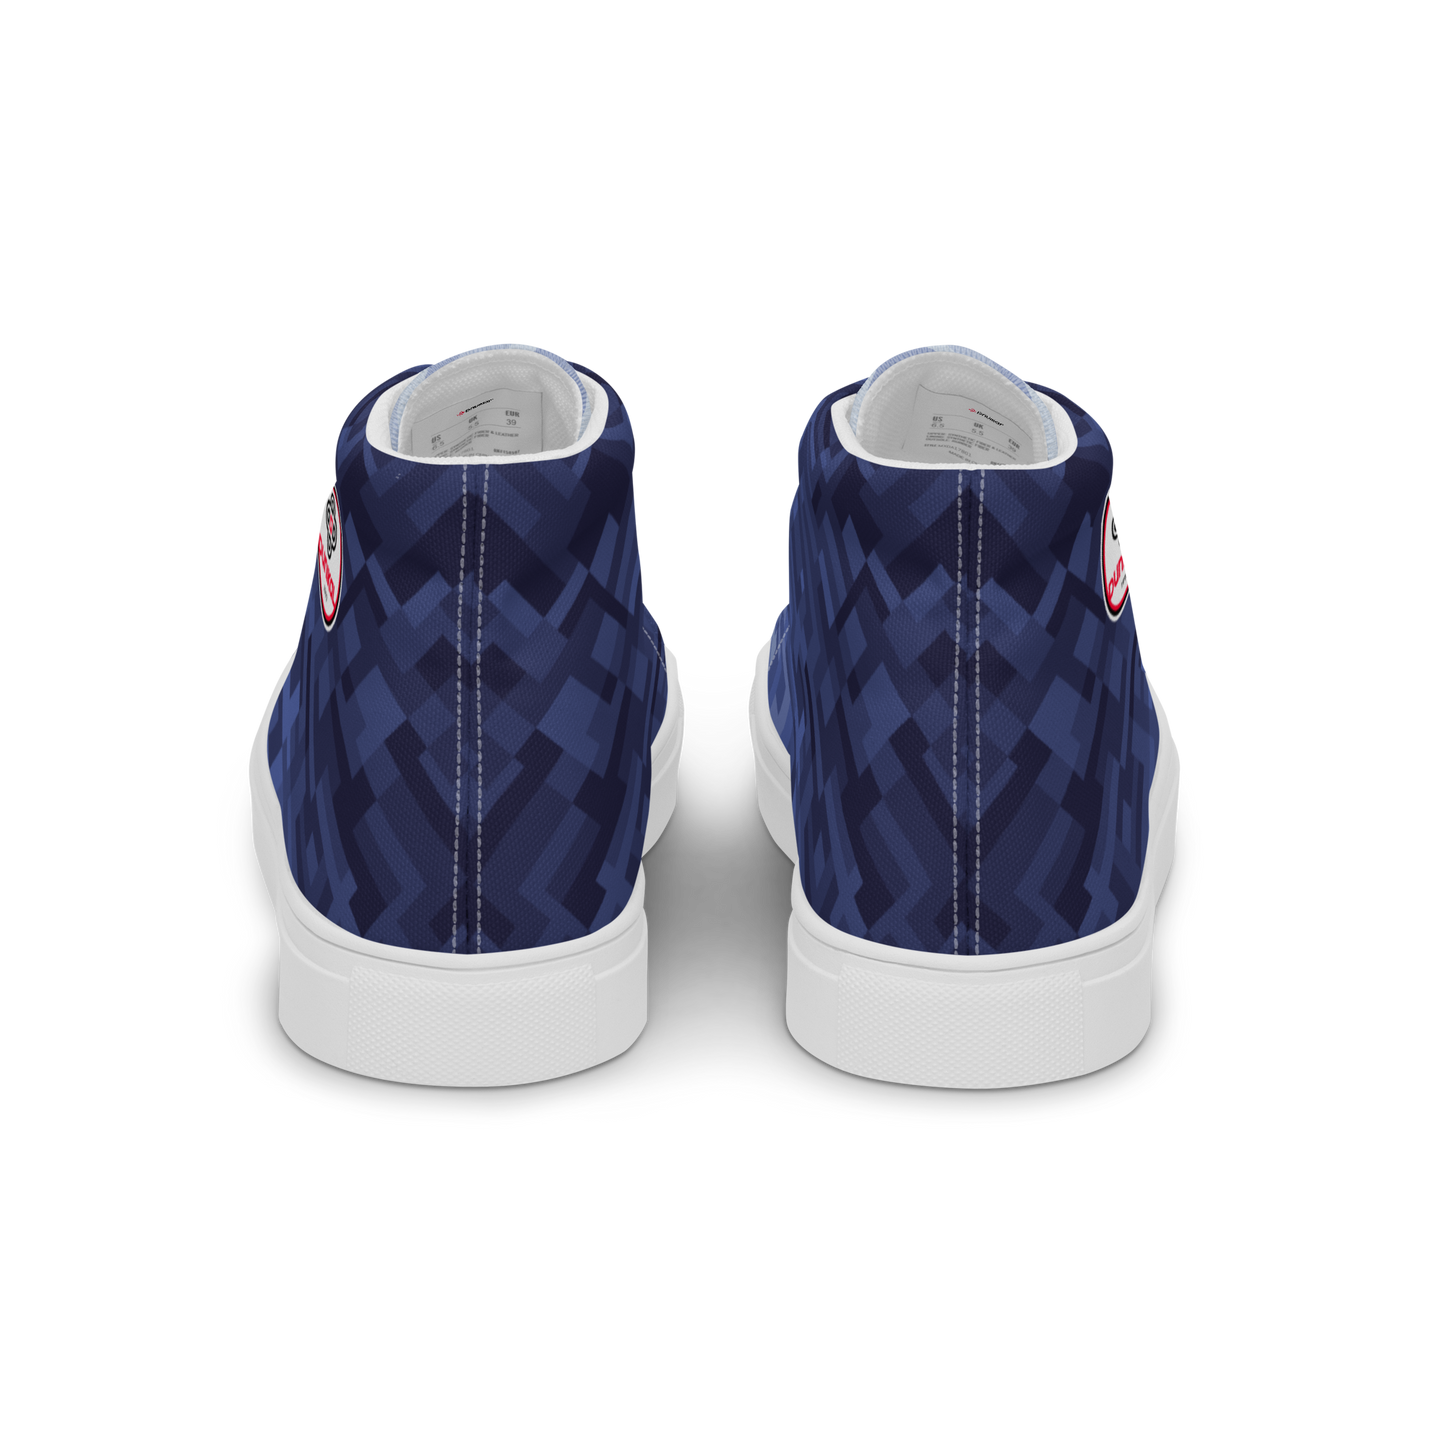 Women's Canvas Sneakers ❯ Polygonal Gradient ❯ Liberty Blue